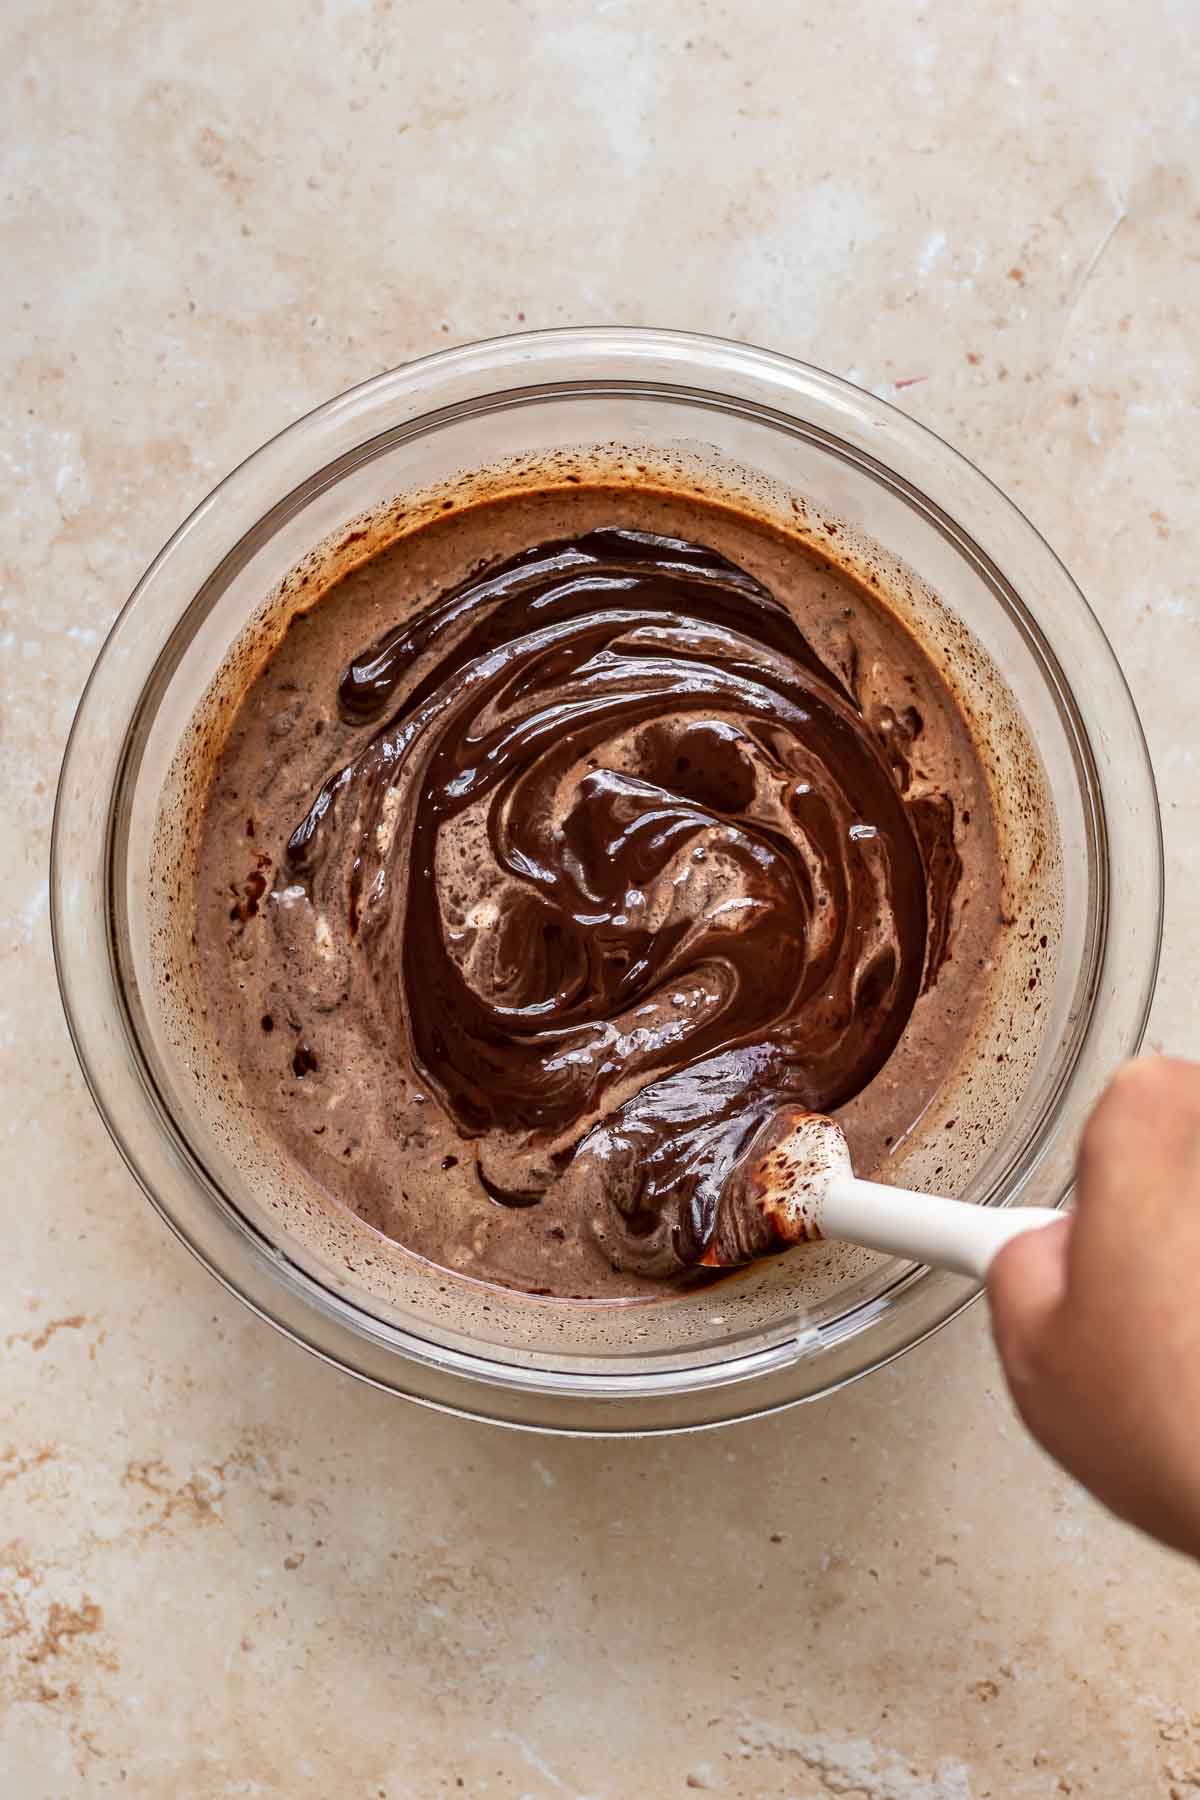 A rubber spatula mixes together dark chocolate ganache in a bowl.